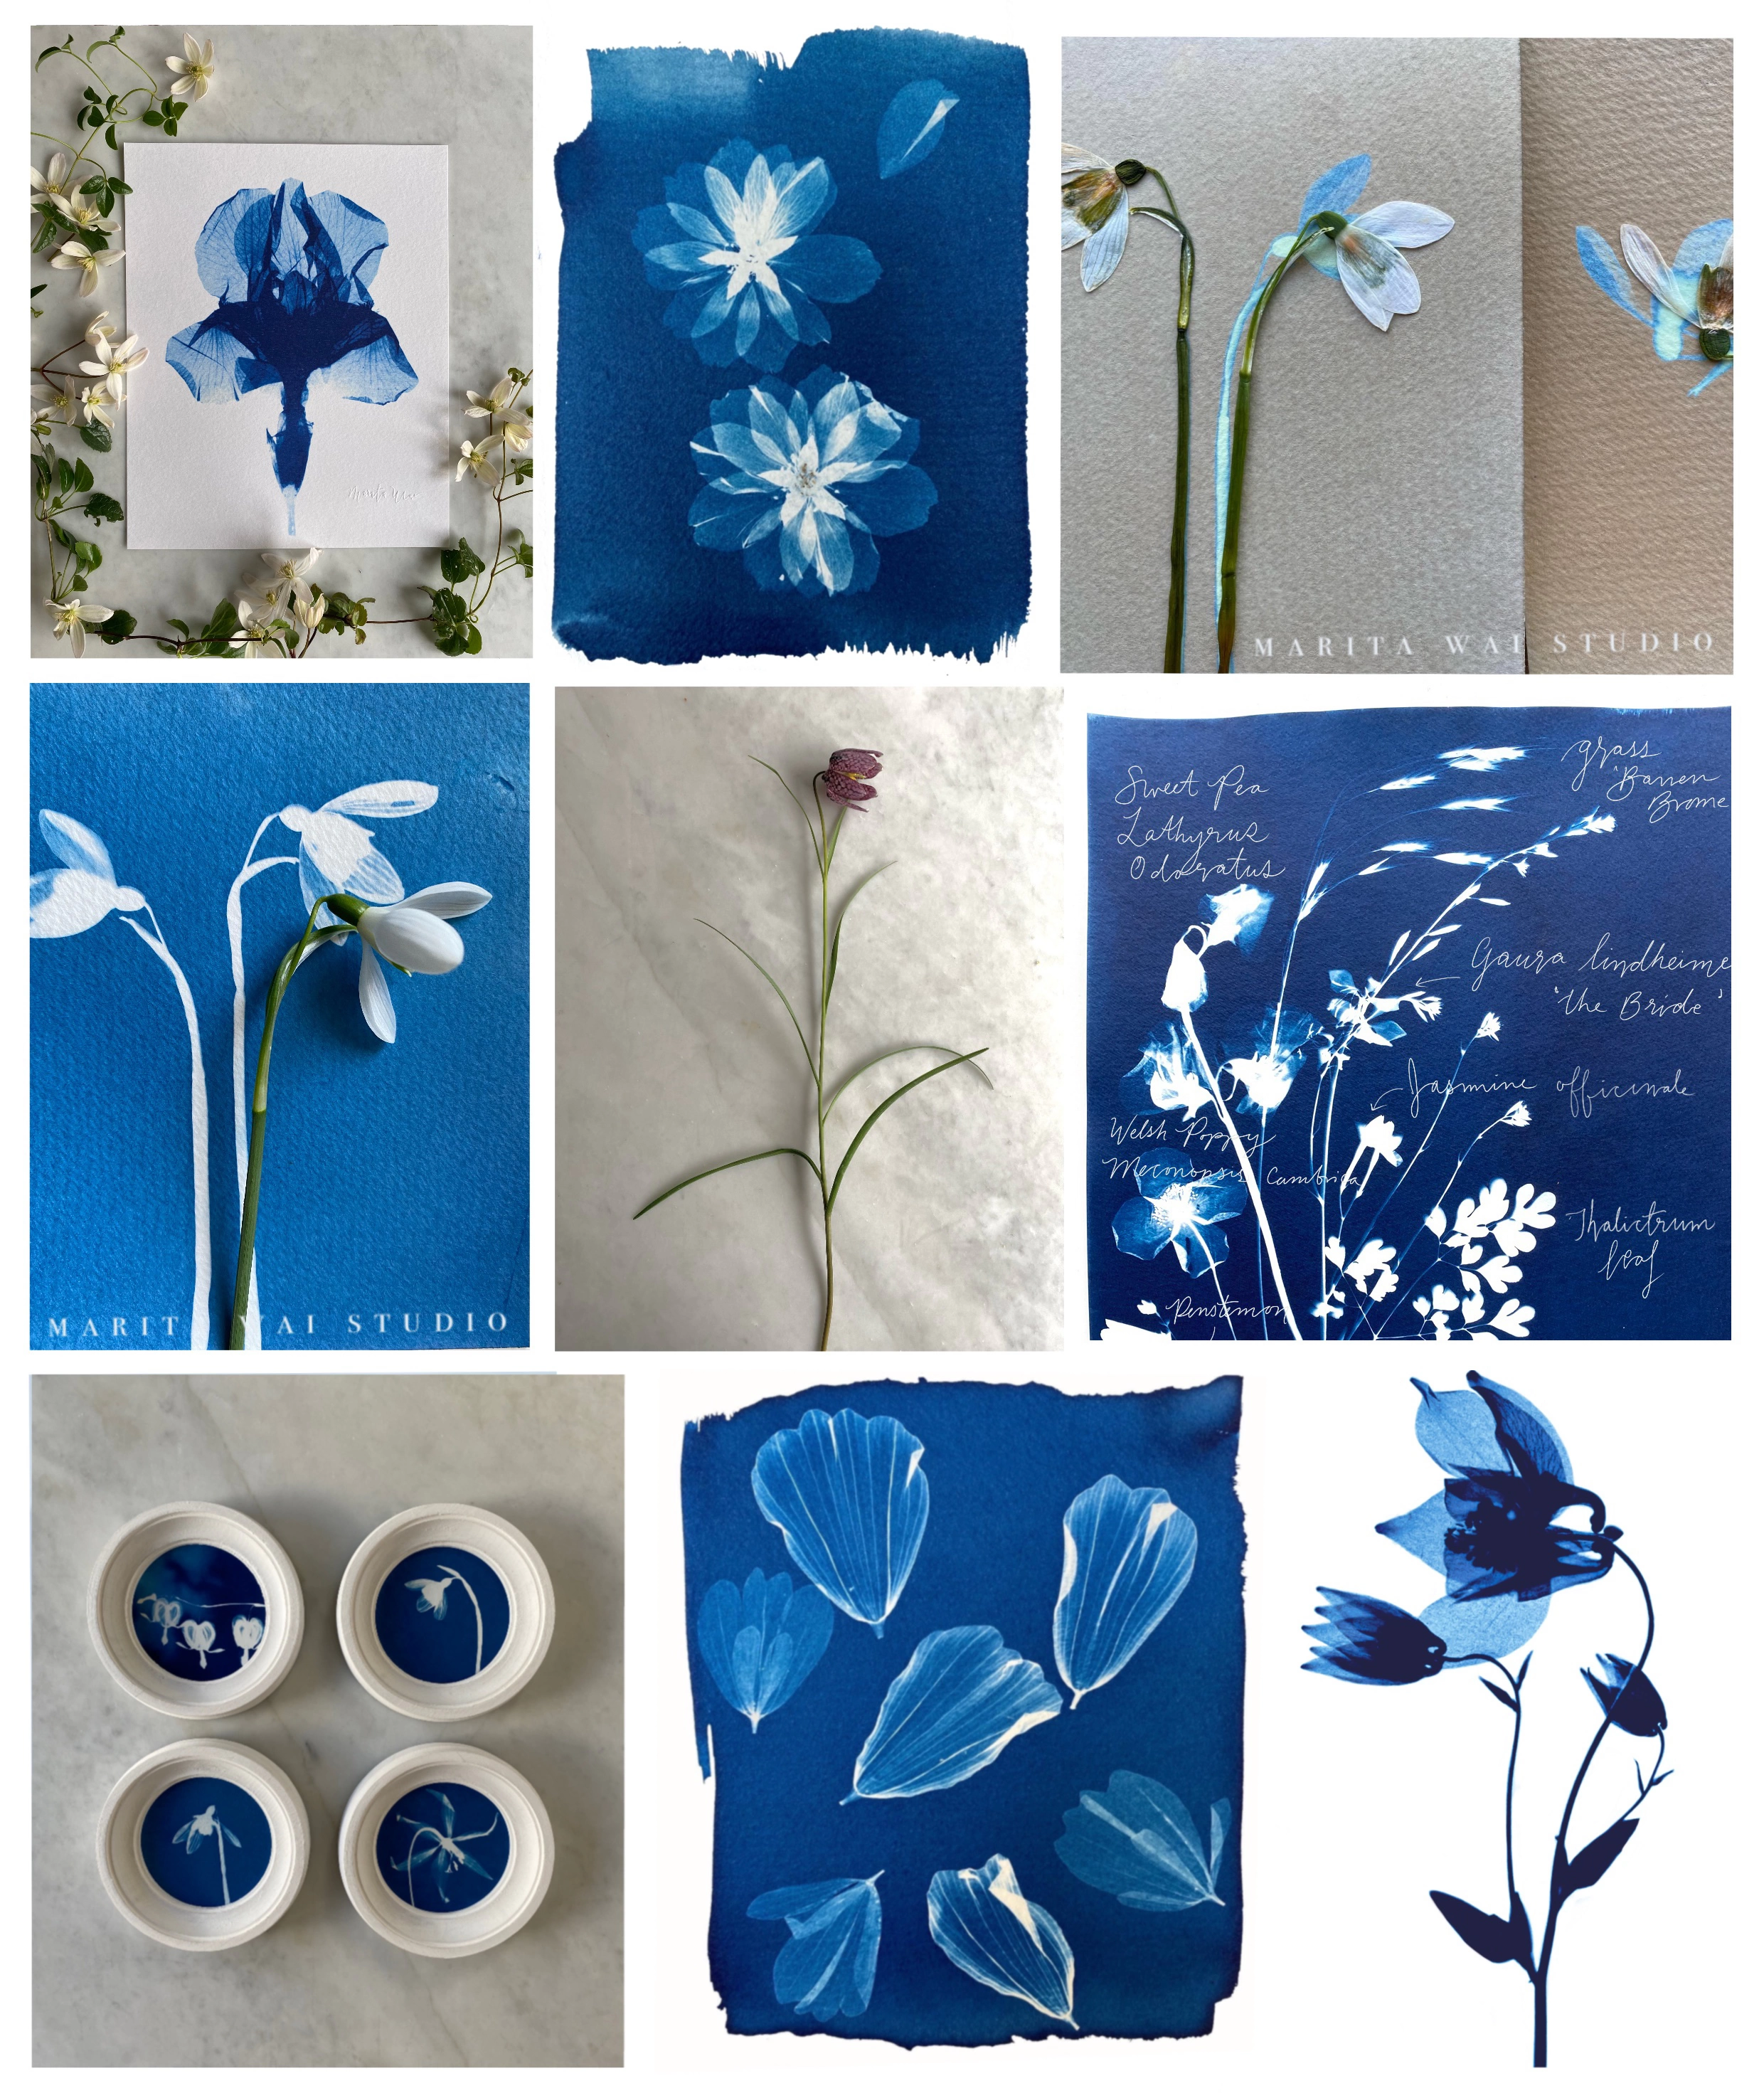 Marita Wai Studio, botanical art cyanotypes created from flowers, original artwork and botanical X-ray prints